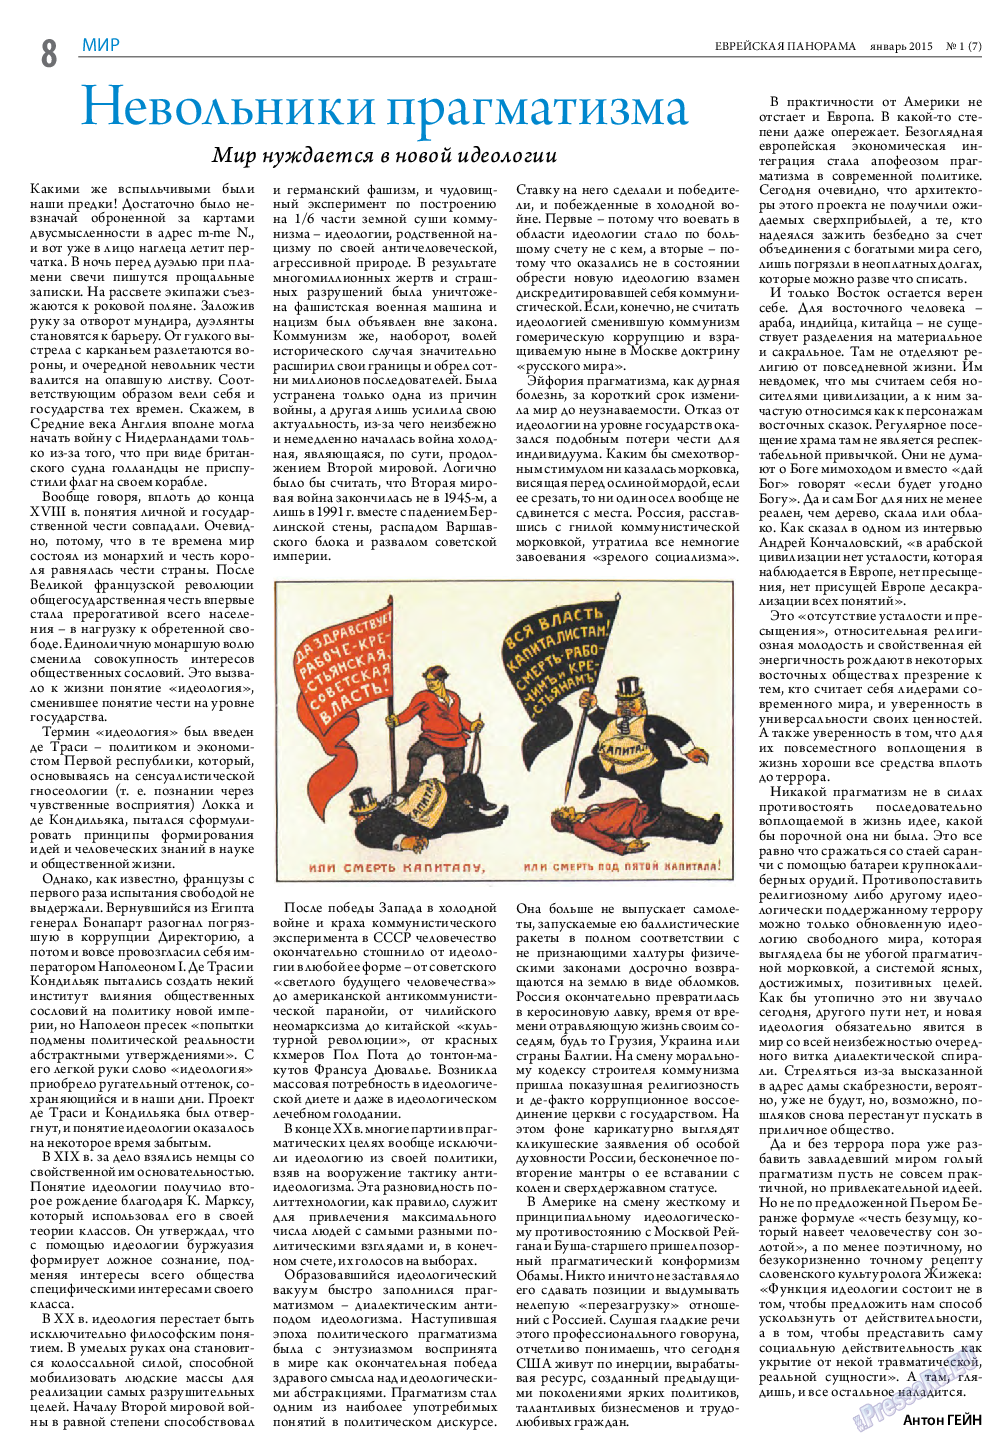 Еврейская панорама, газета. 2015 №1 стр.8